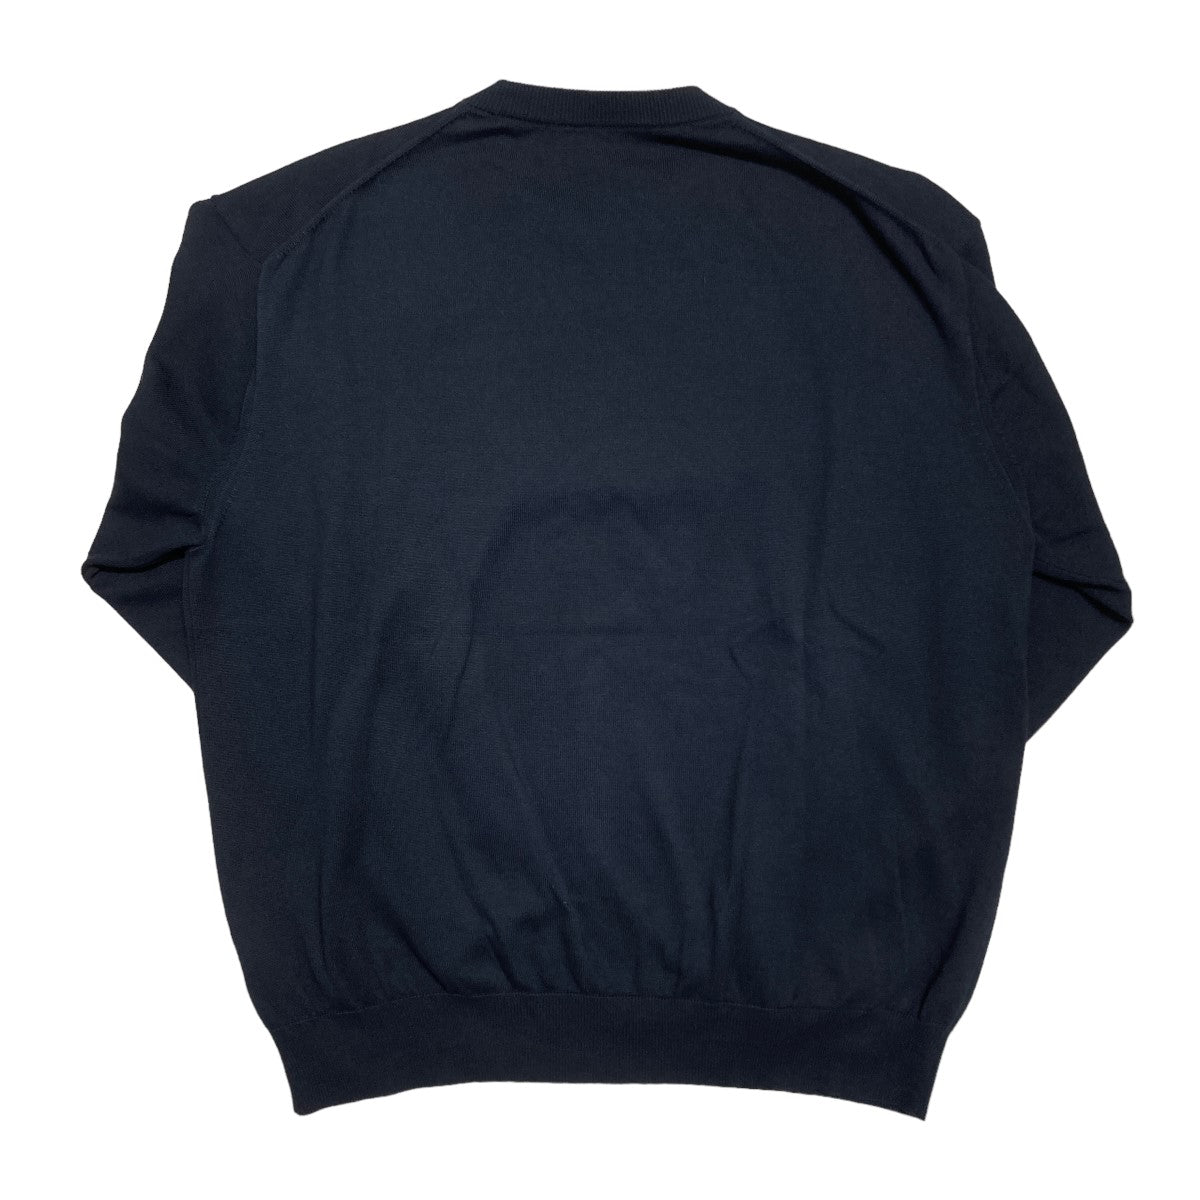 A．PRESSE(アプレッセ) 24SS Cotton knit L／S T-Shirt クルーネックニット／24SAP-03-06K